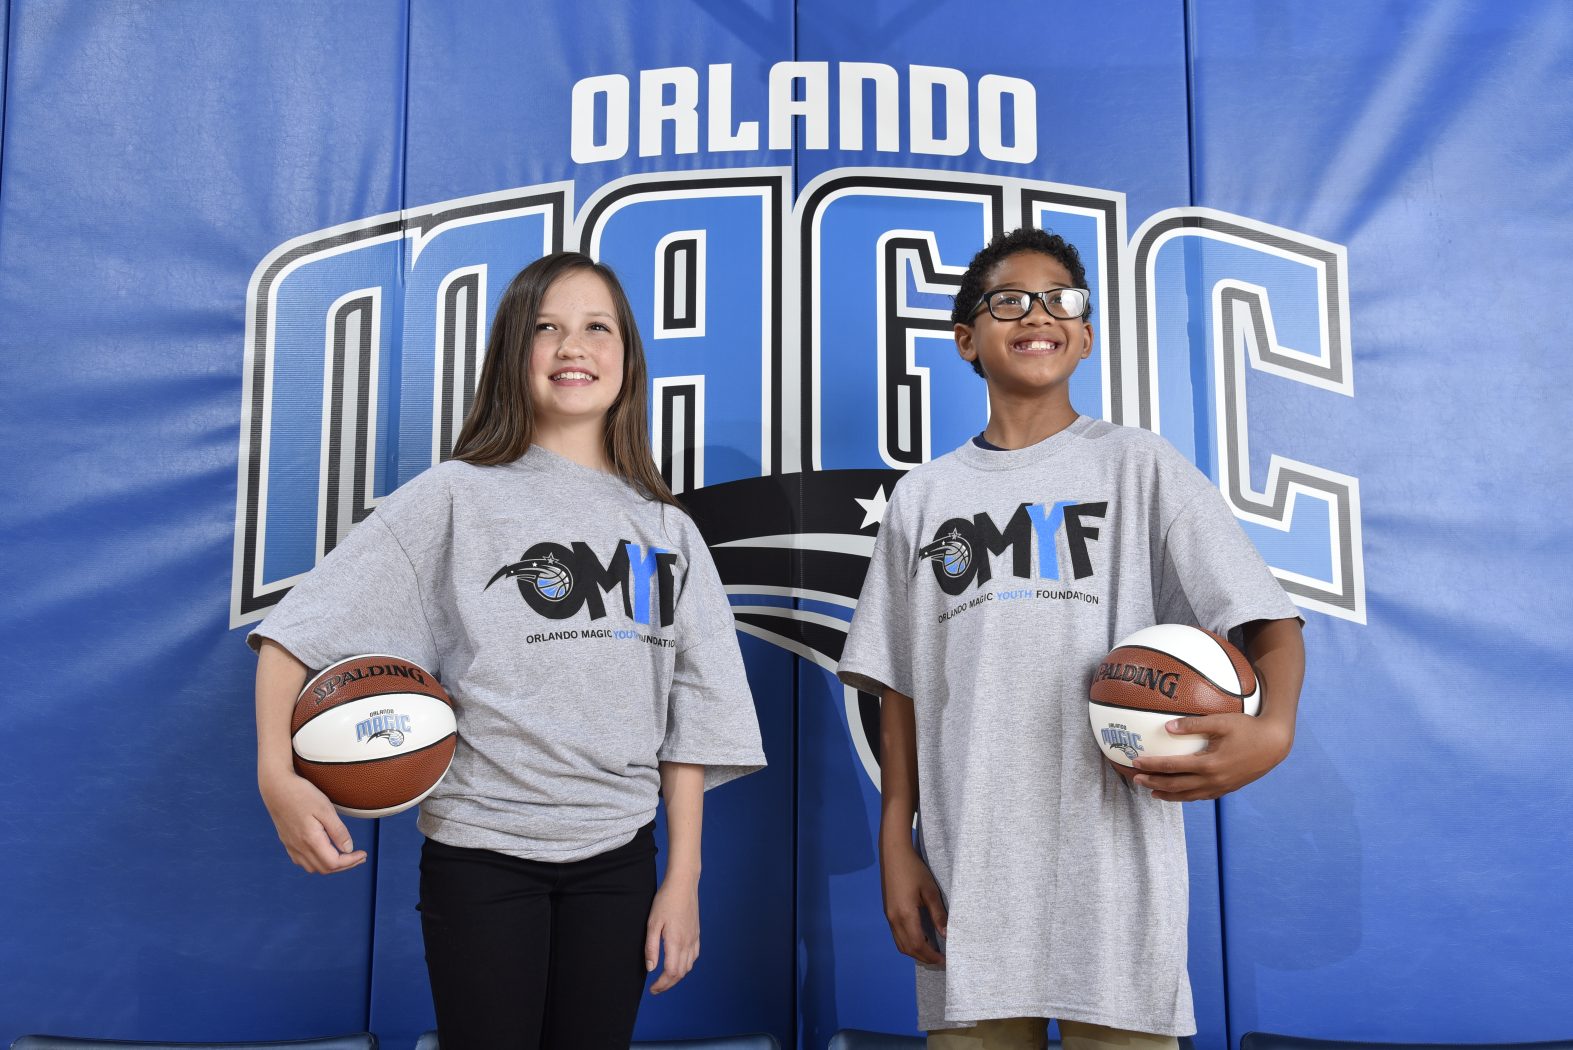 ORLANDO, FL - JUNE 1: OMYF marketing shoot on June 1, 2016 at Amway Center in Orlando, Florida. NOTE TO USER: Mandatory Copyright Notice: Copyright 2016 Fernando Medina/Orlando Magic